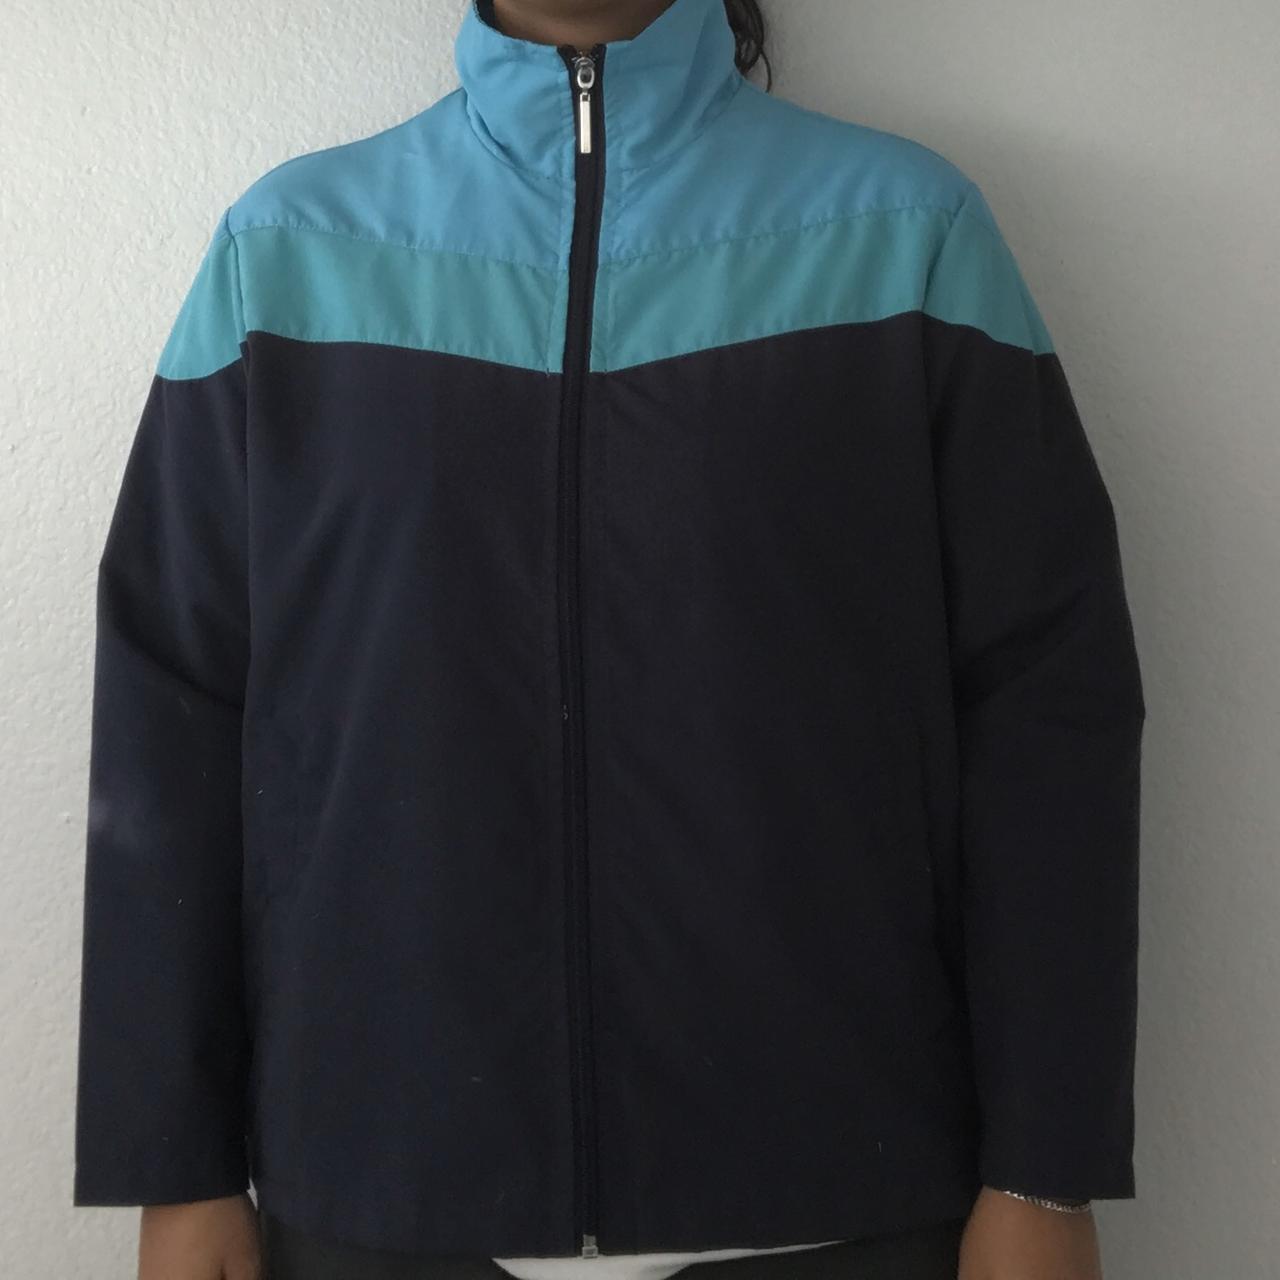 Product Image 3 - Light weight coaches jacket. 2